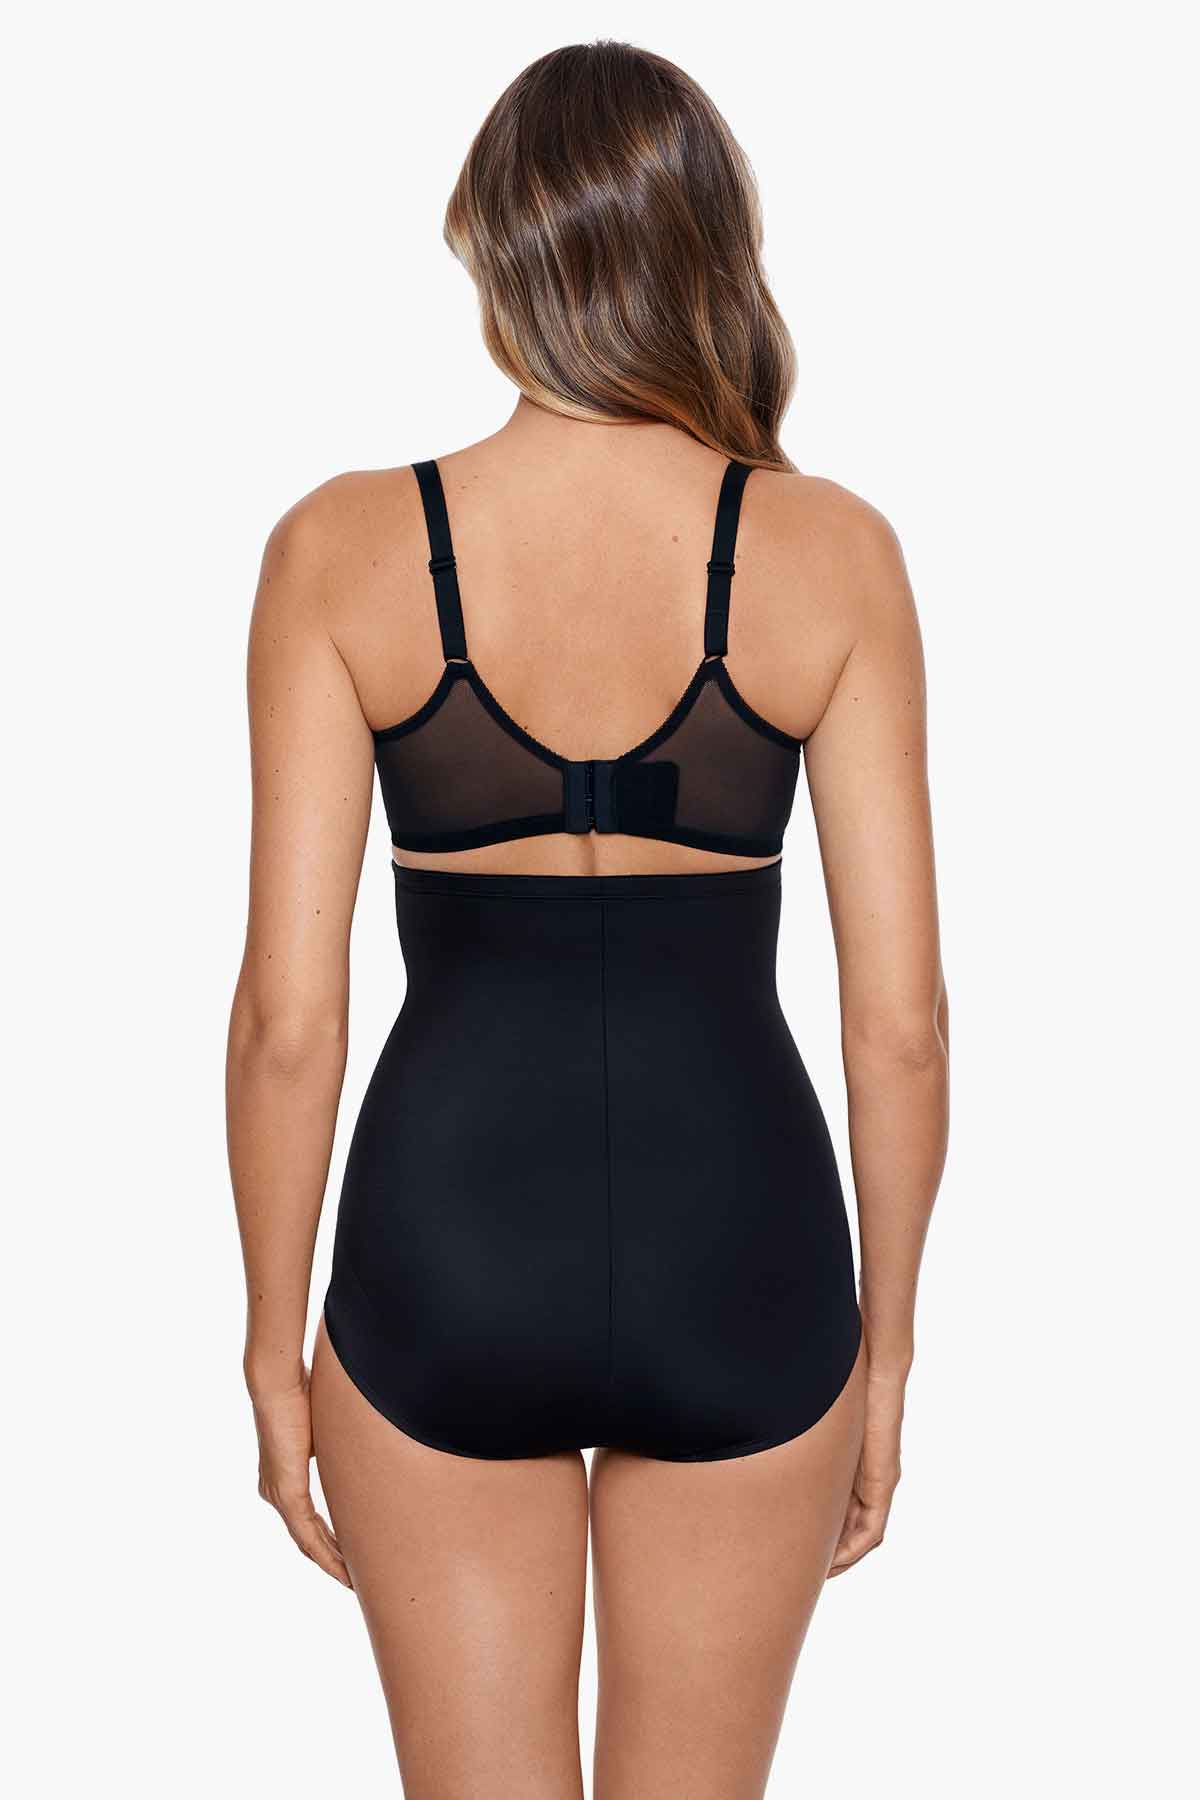 NWT Miraclesuit Women's XL Comfy Curves High-Waist Thong Shaper 2528 Beige  $42